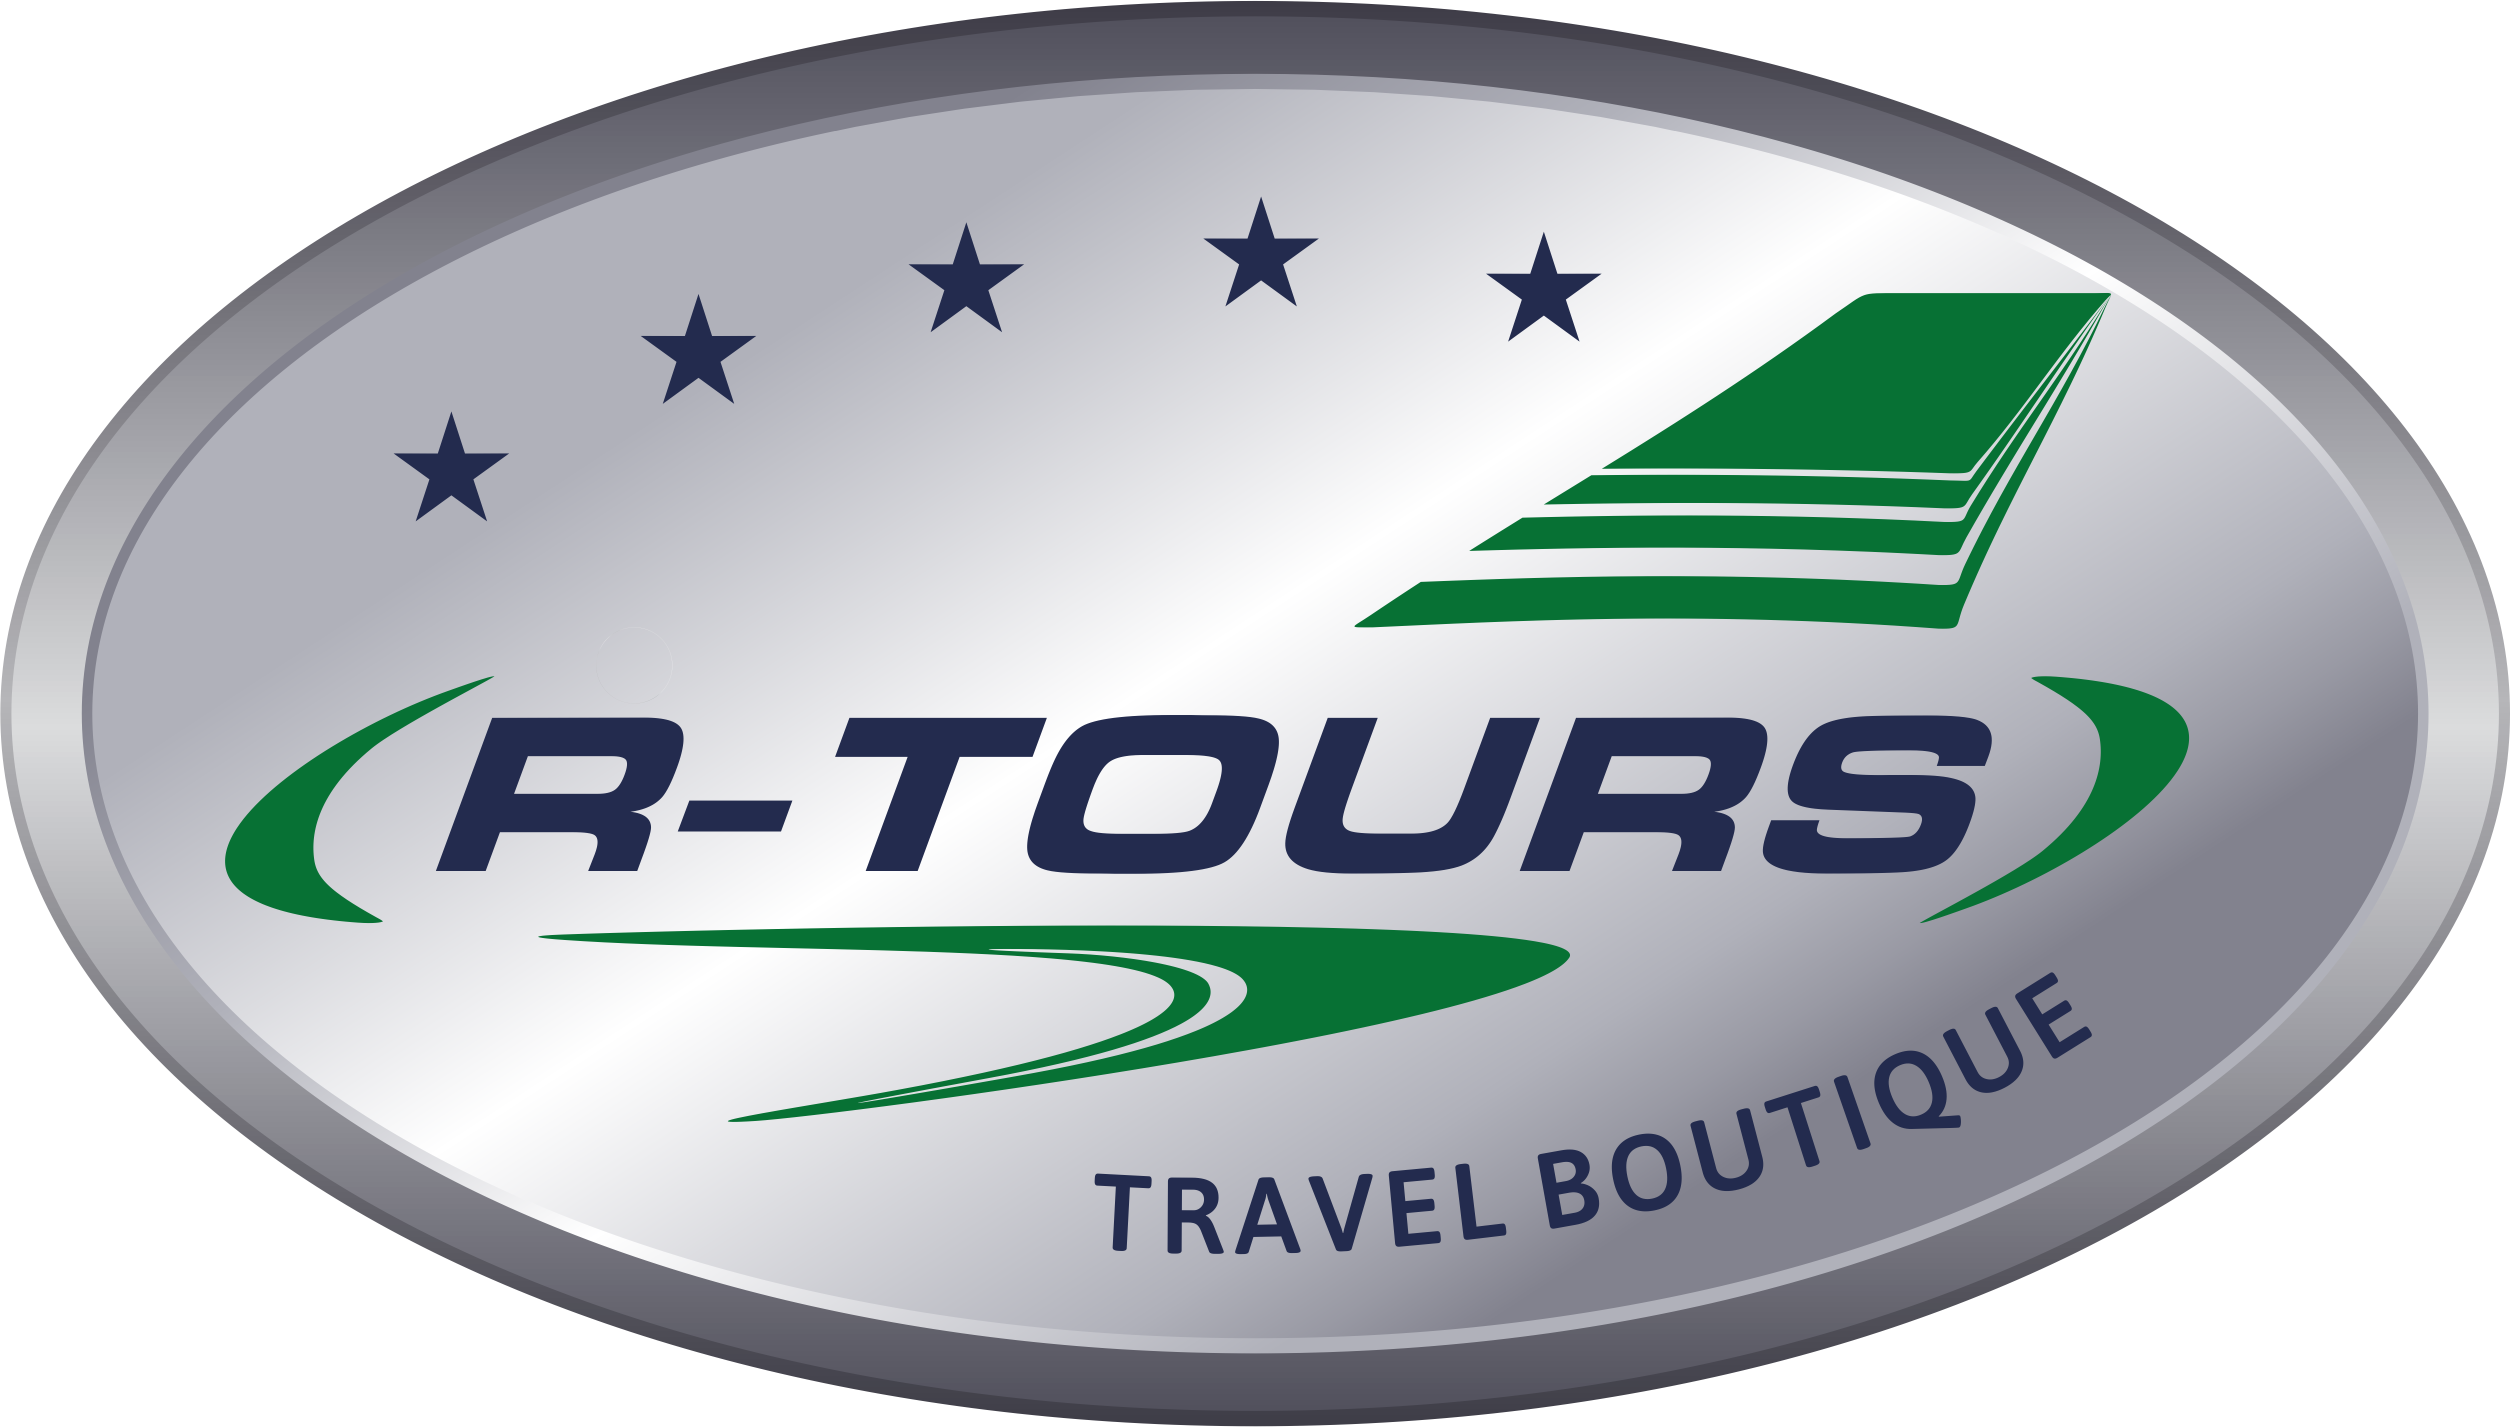 R-Tours logo